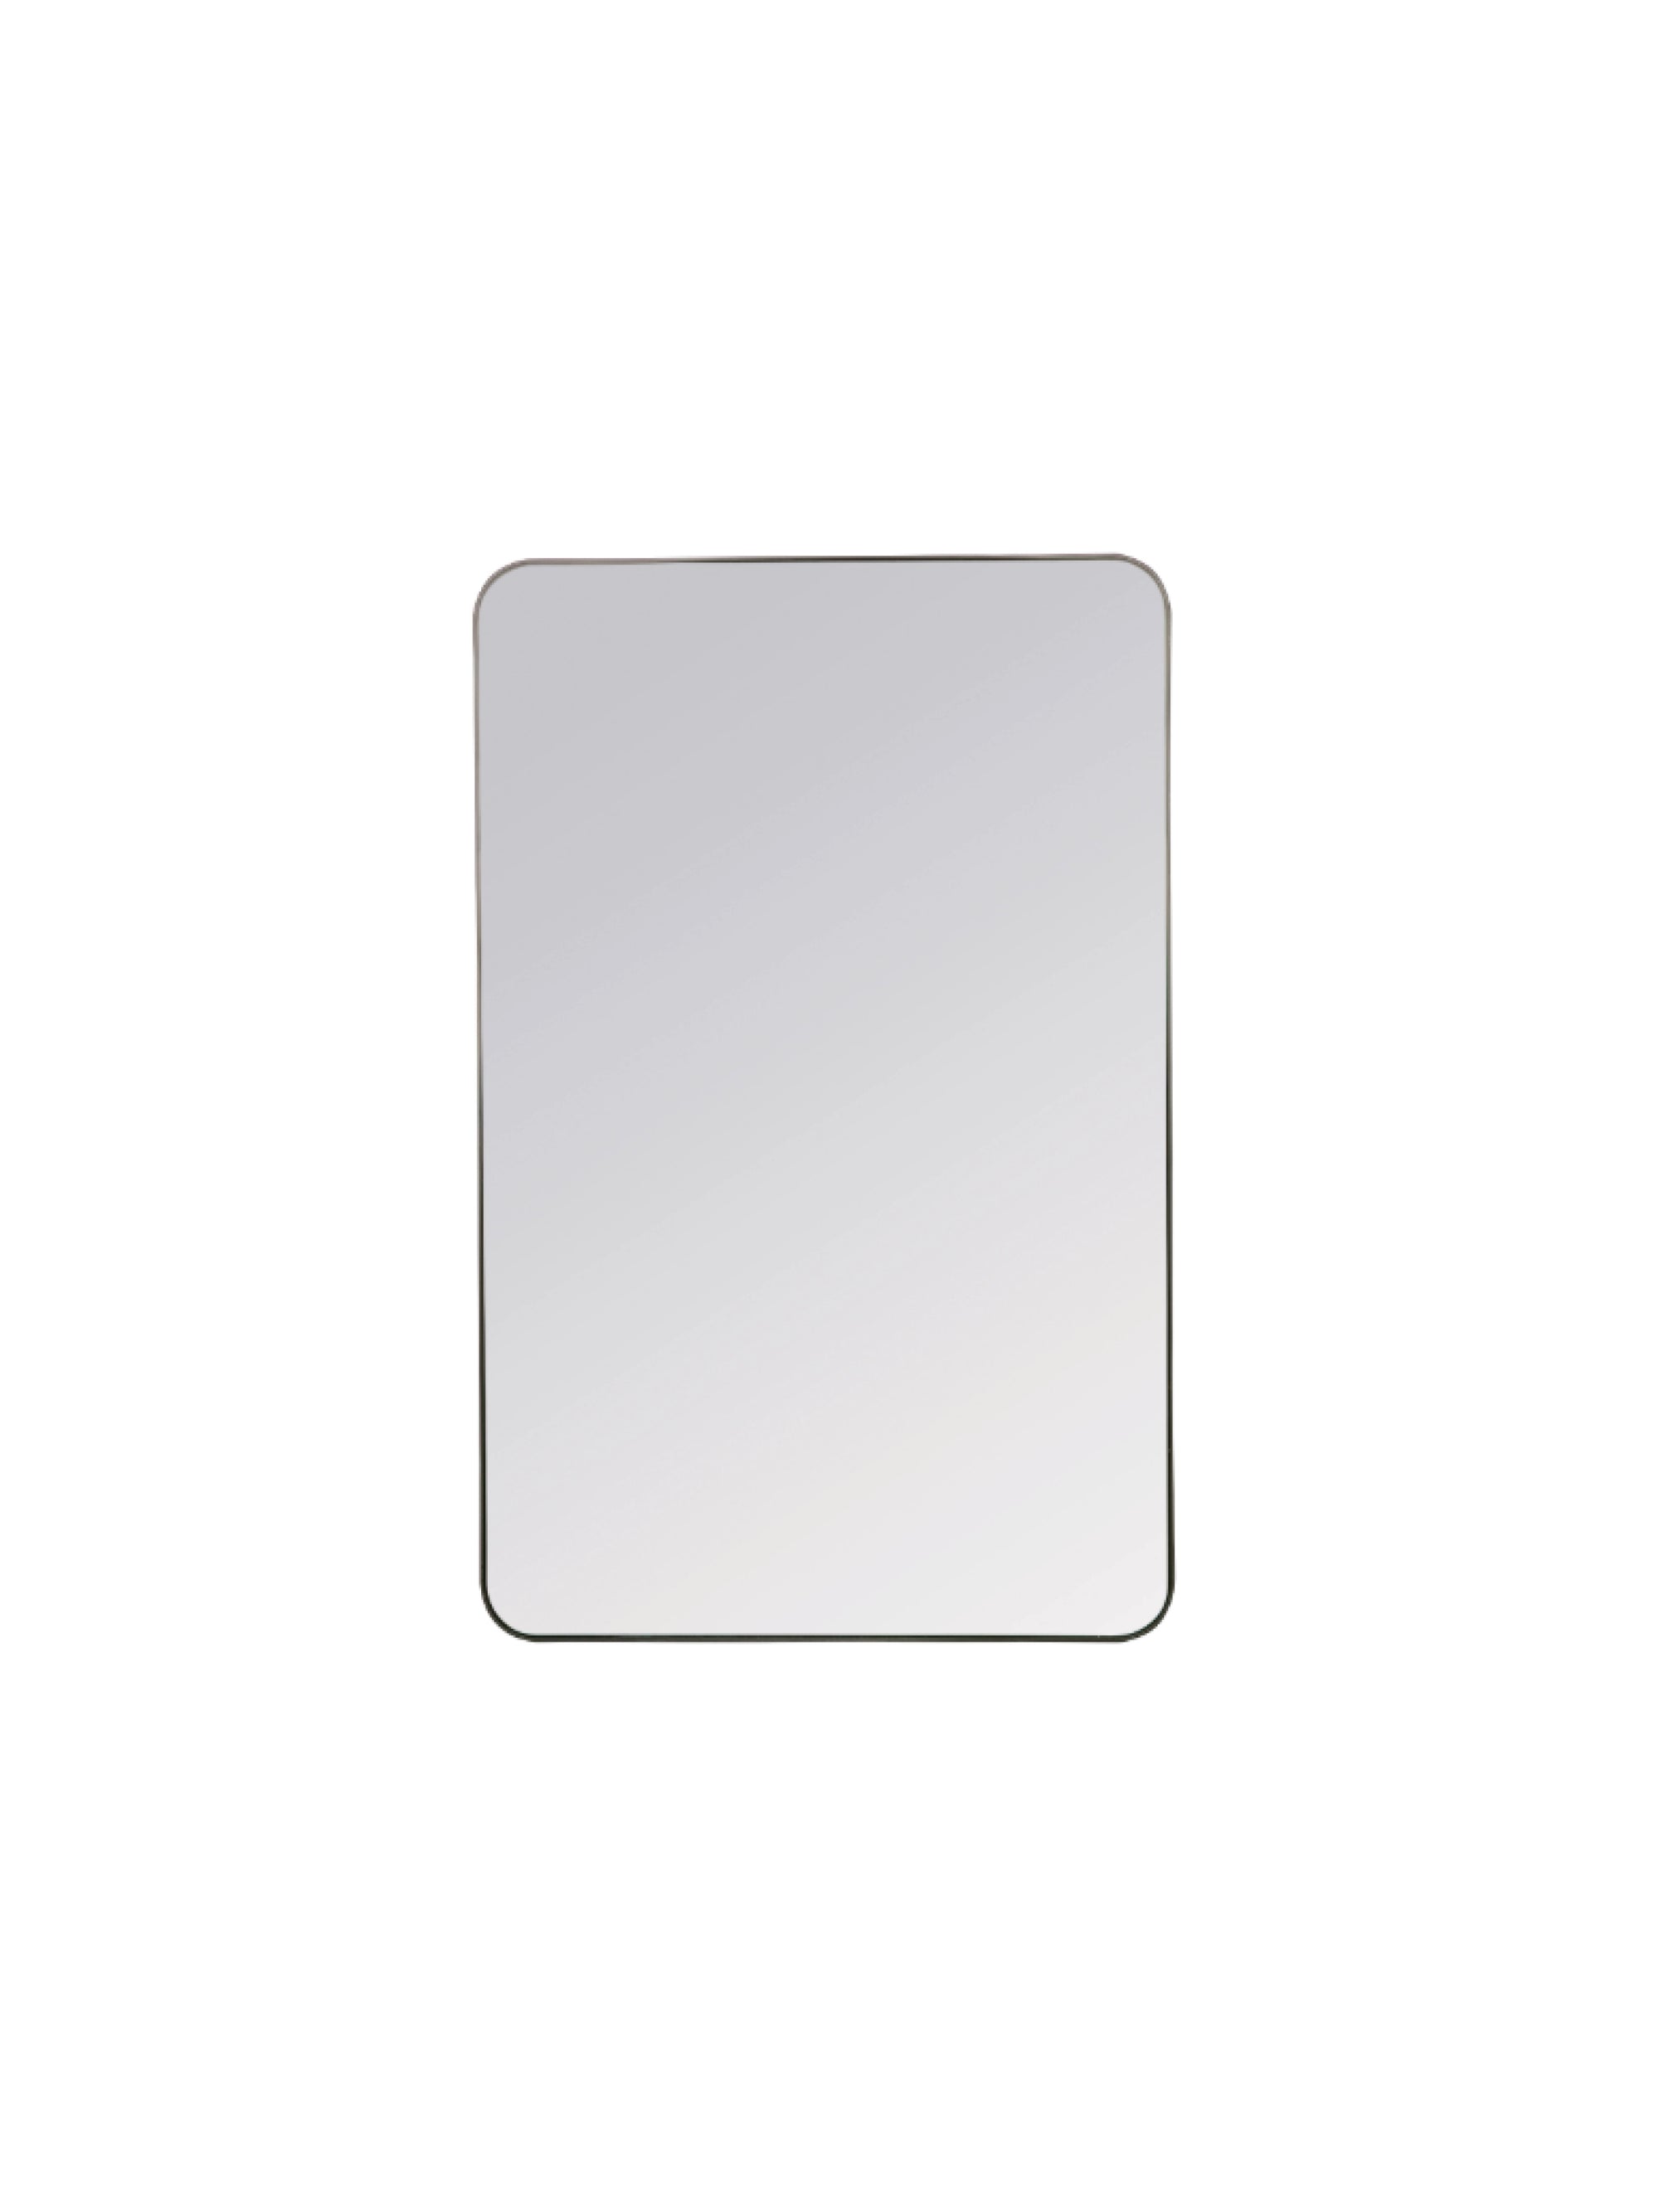 Metal Wall Mirror